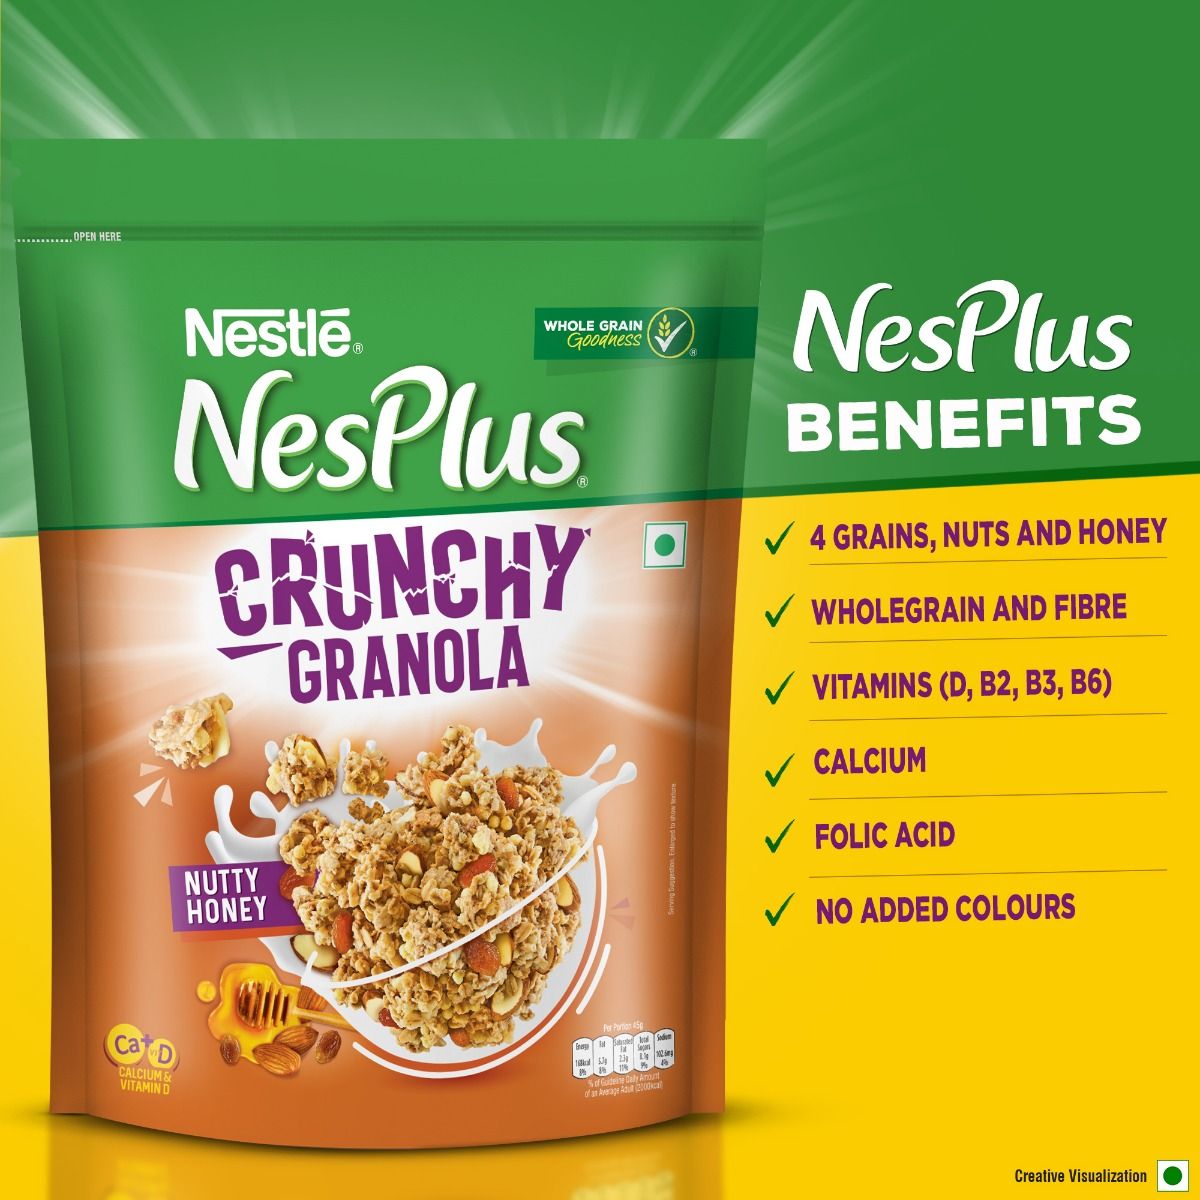 Nestle NesPlus Nutty Honey Crunchy Granola, 475 gm, Pack of 1 